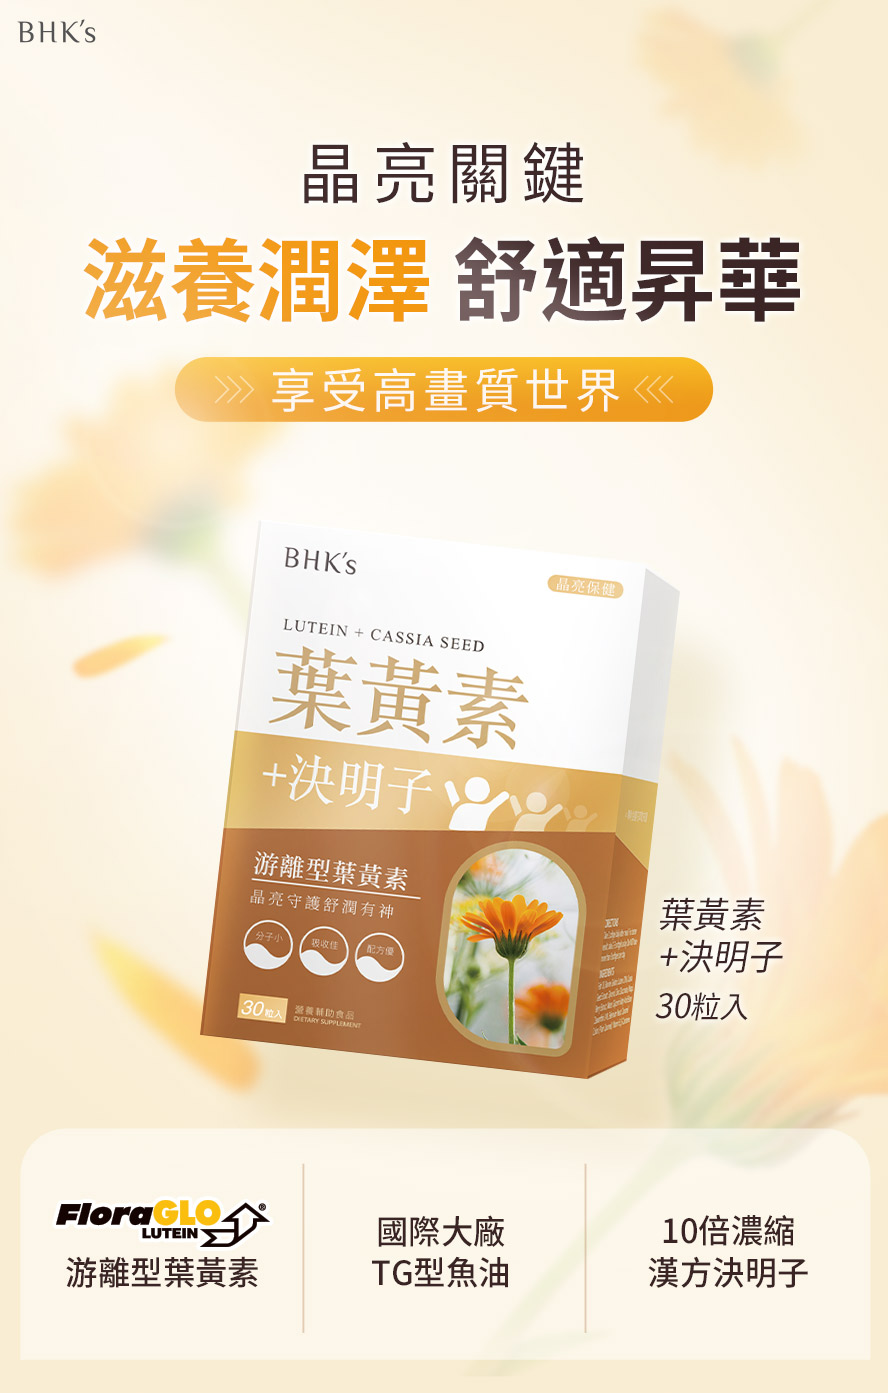 BHK's葉黃素+決明子產品介紹。